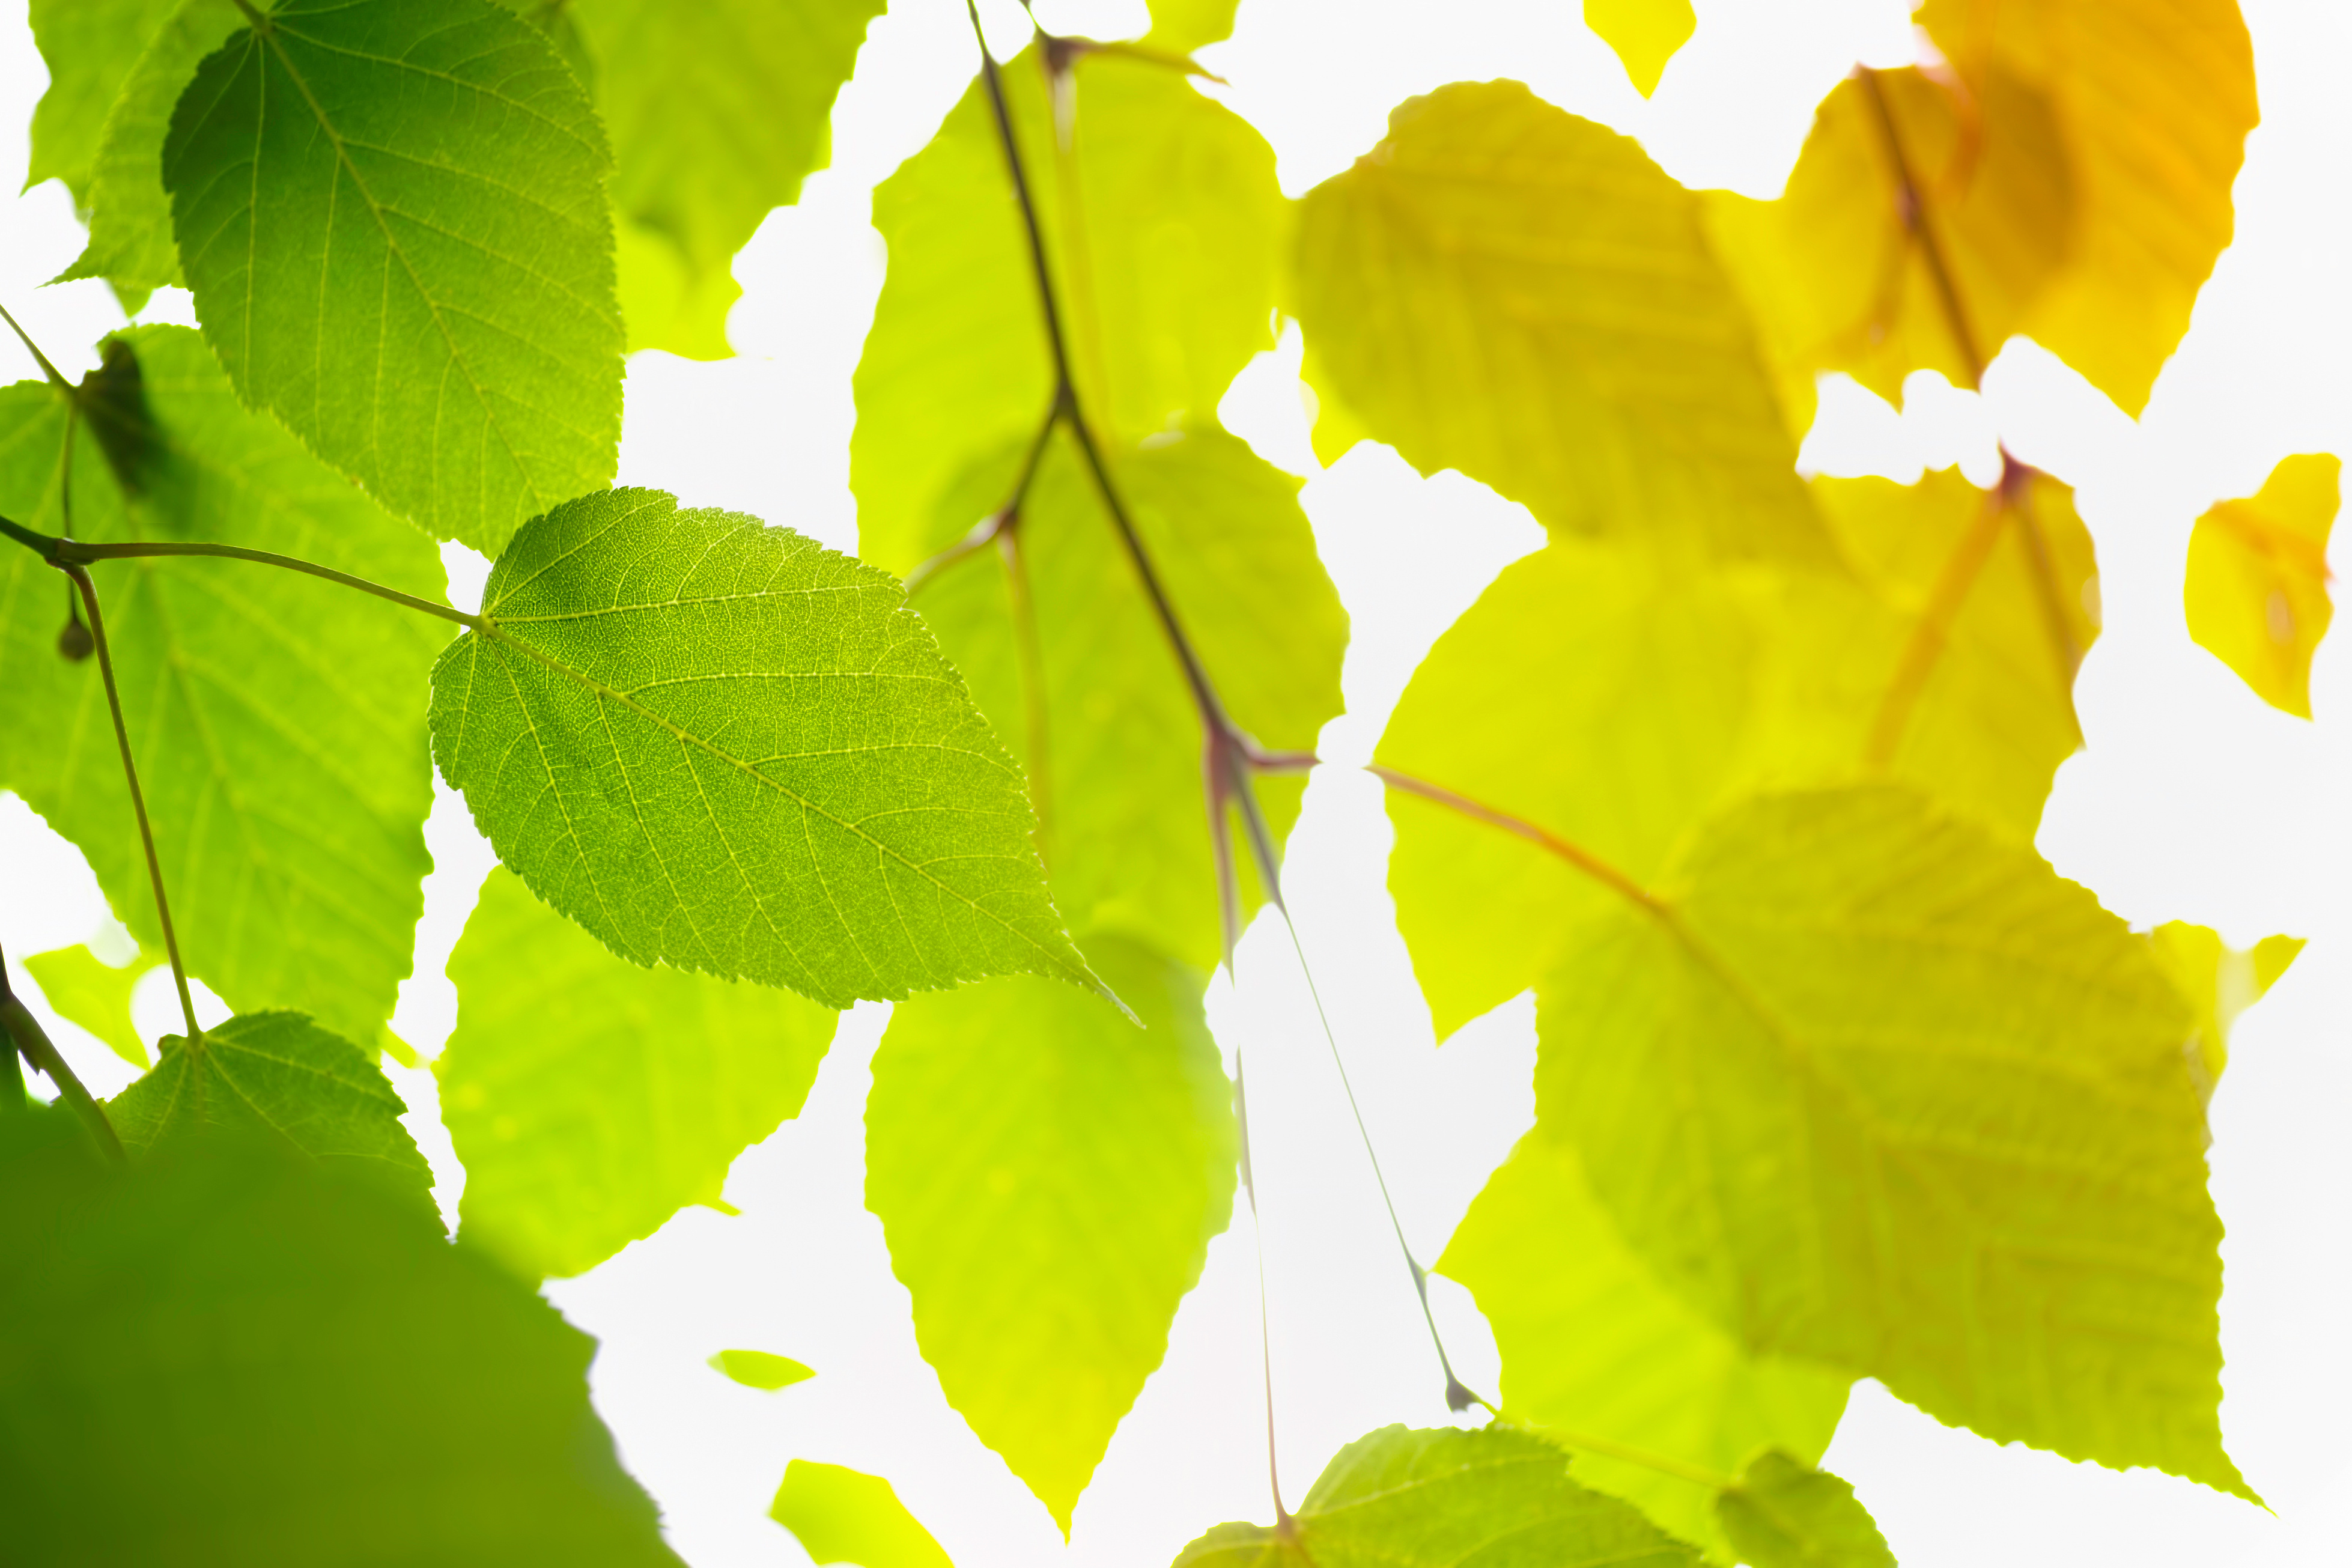 Sunlight filtering through green leaves.